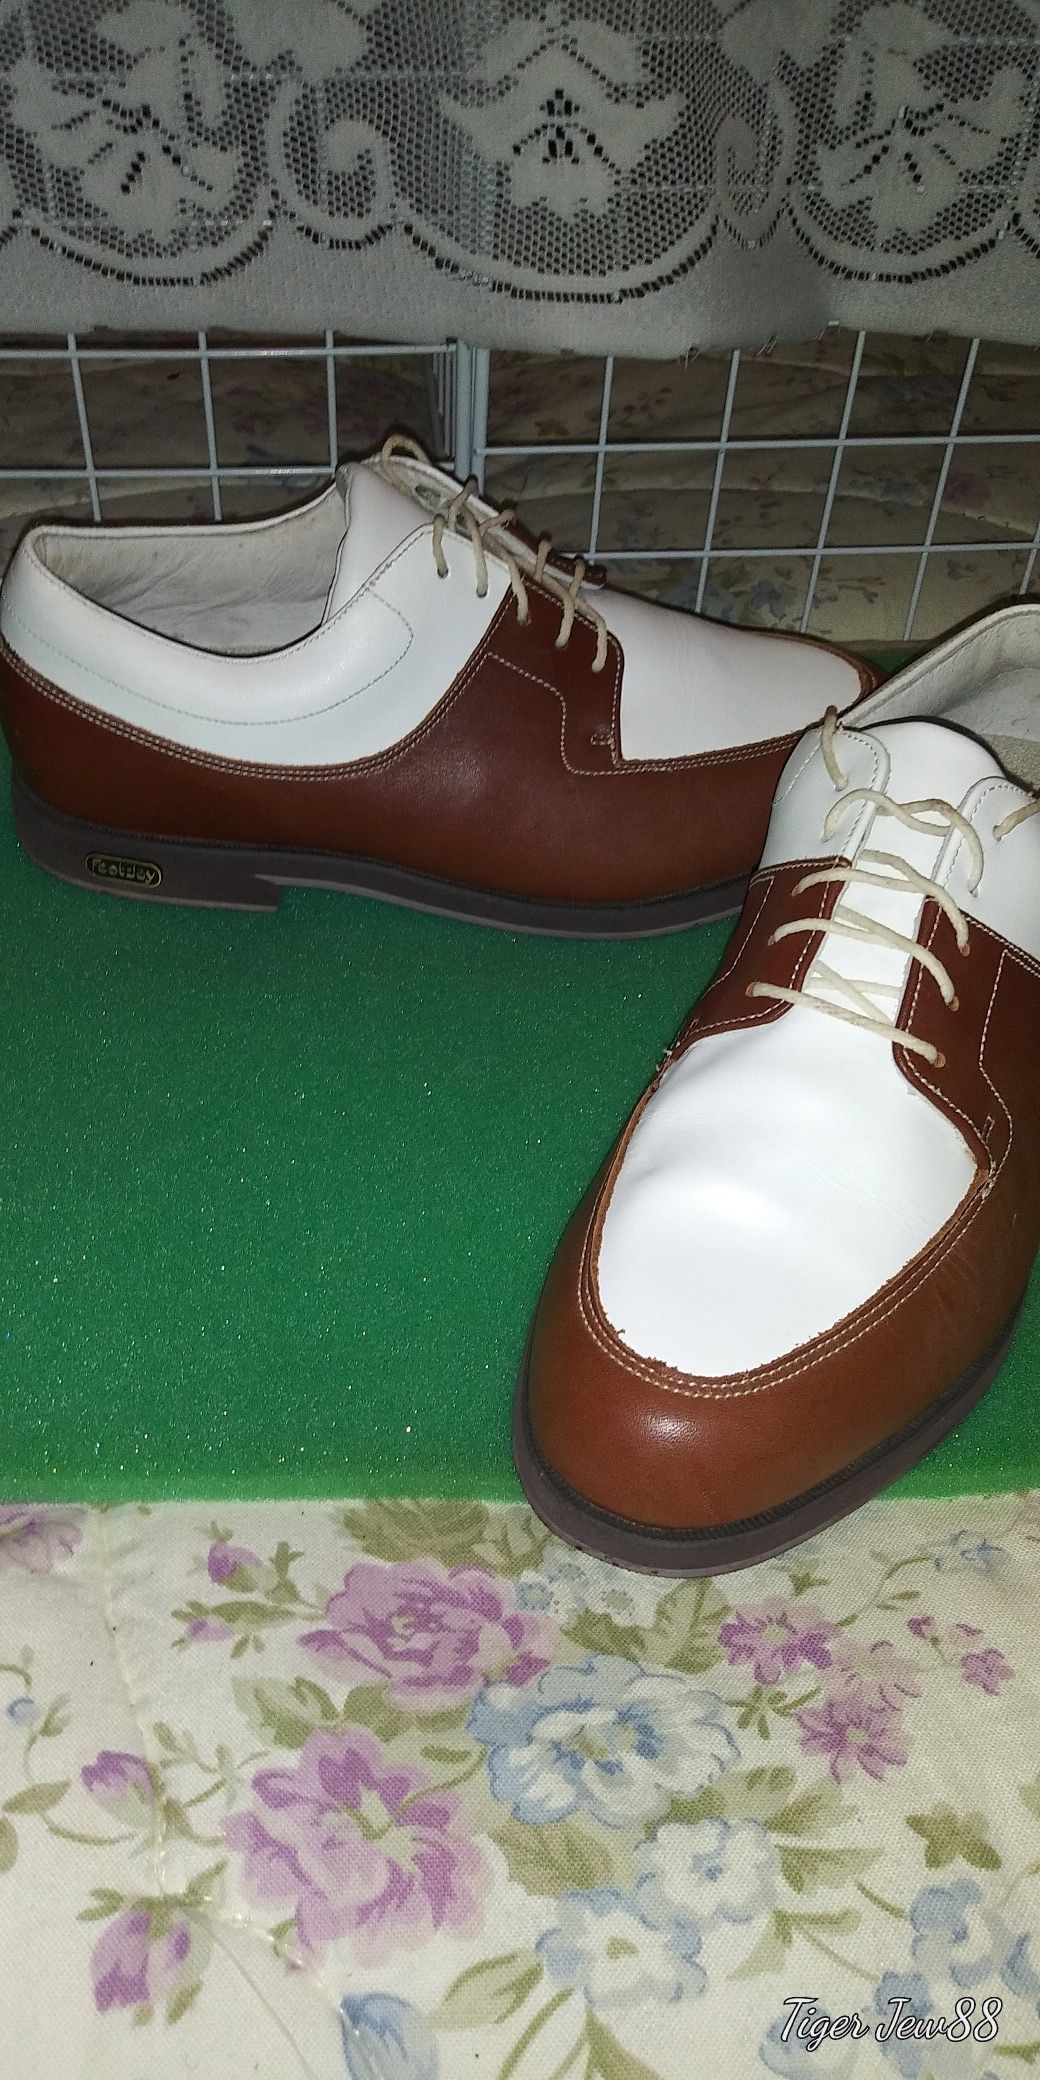 Golf shoes ,Foot joy size 7